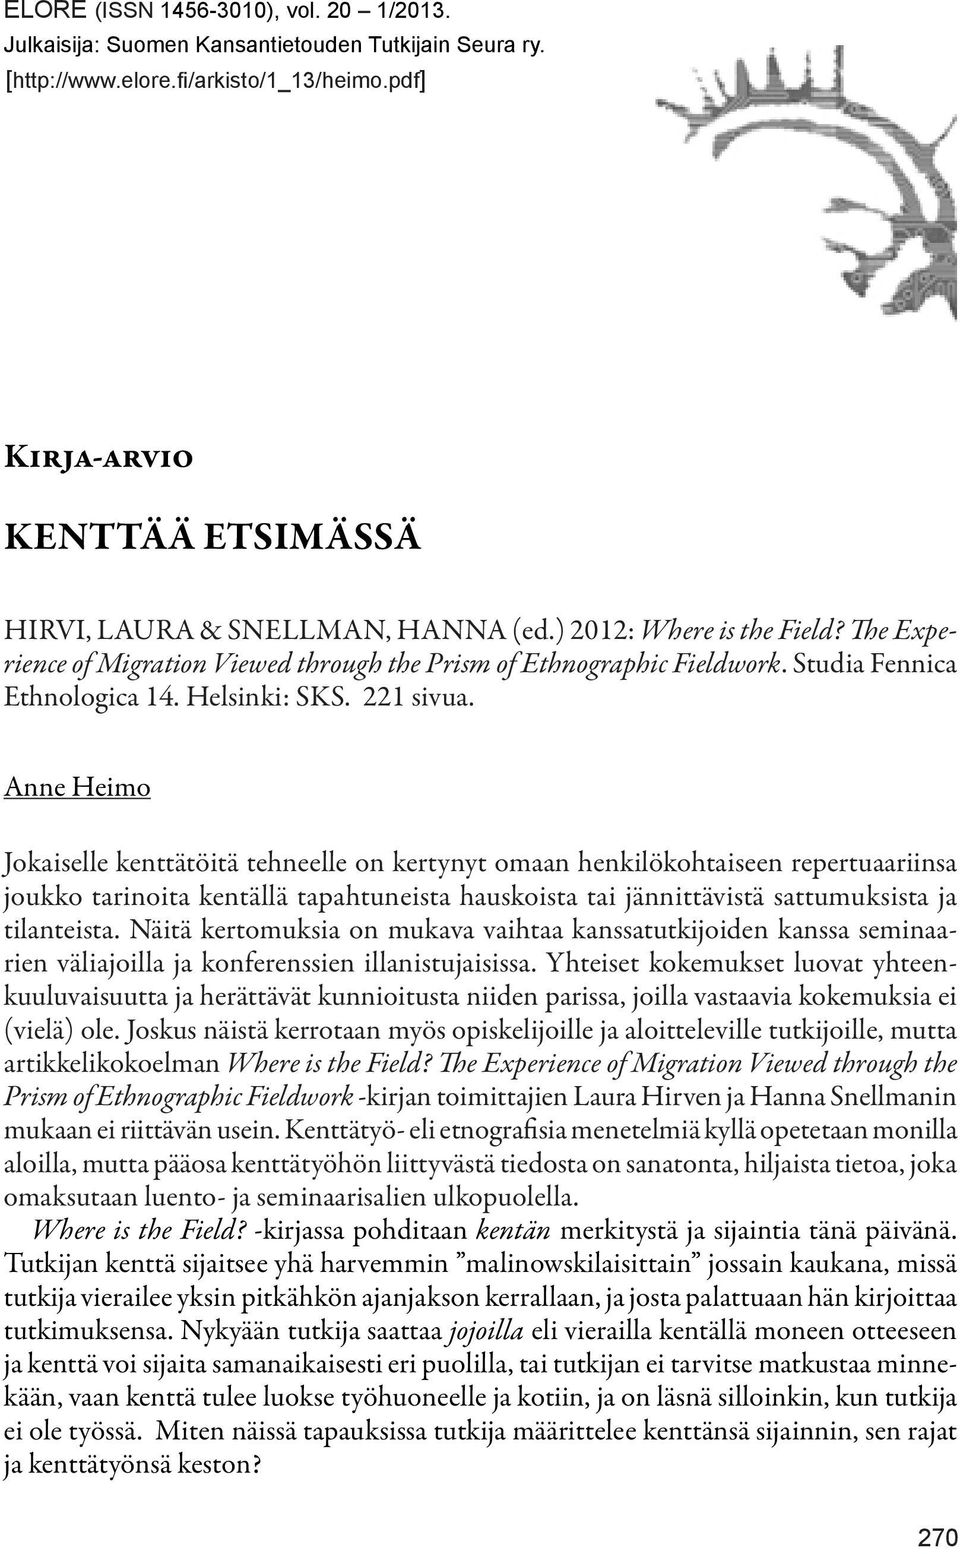 Studia Fennica Ethnologica 14. Helsinki: SKS. 221 sivua.